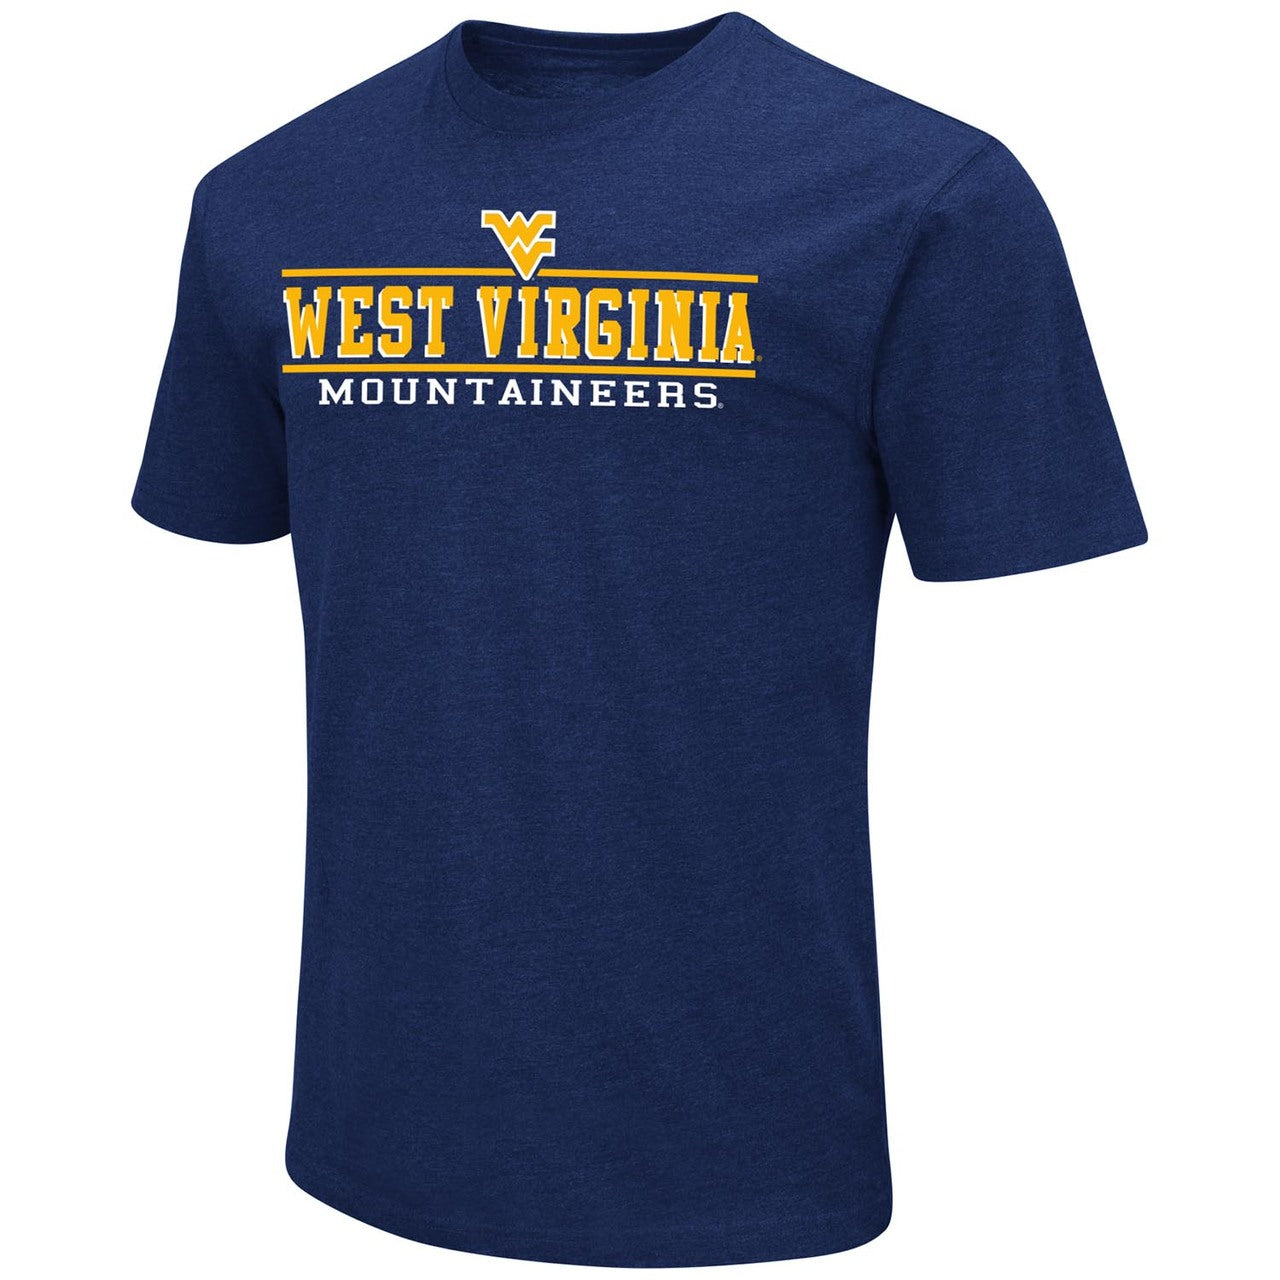 West Virginia Mountaineers West Virginia Mountaineers NCAA Adult Soft Vintage Tailgate T-Shirt